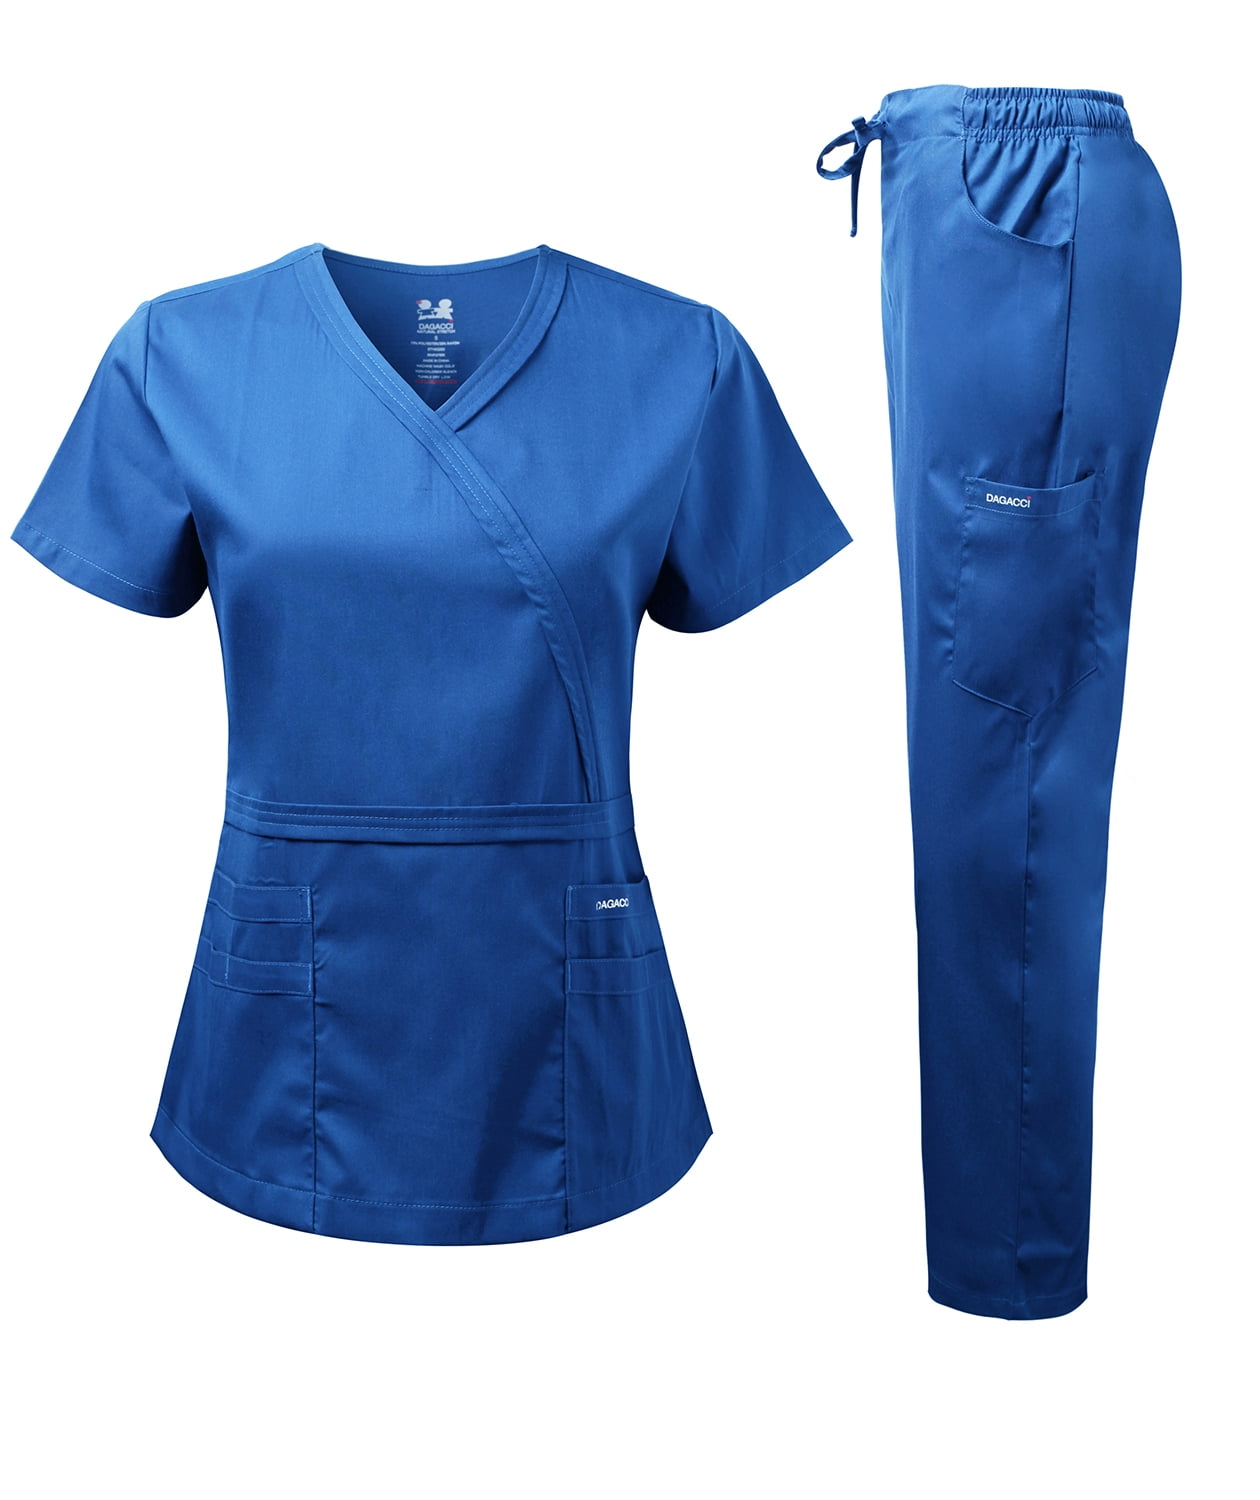 5/PK Size Large Women's Contrast Scallop Nursing Uniform Scrubs Set Top & Pants 